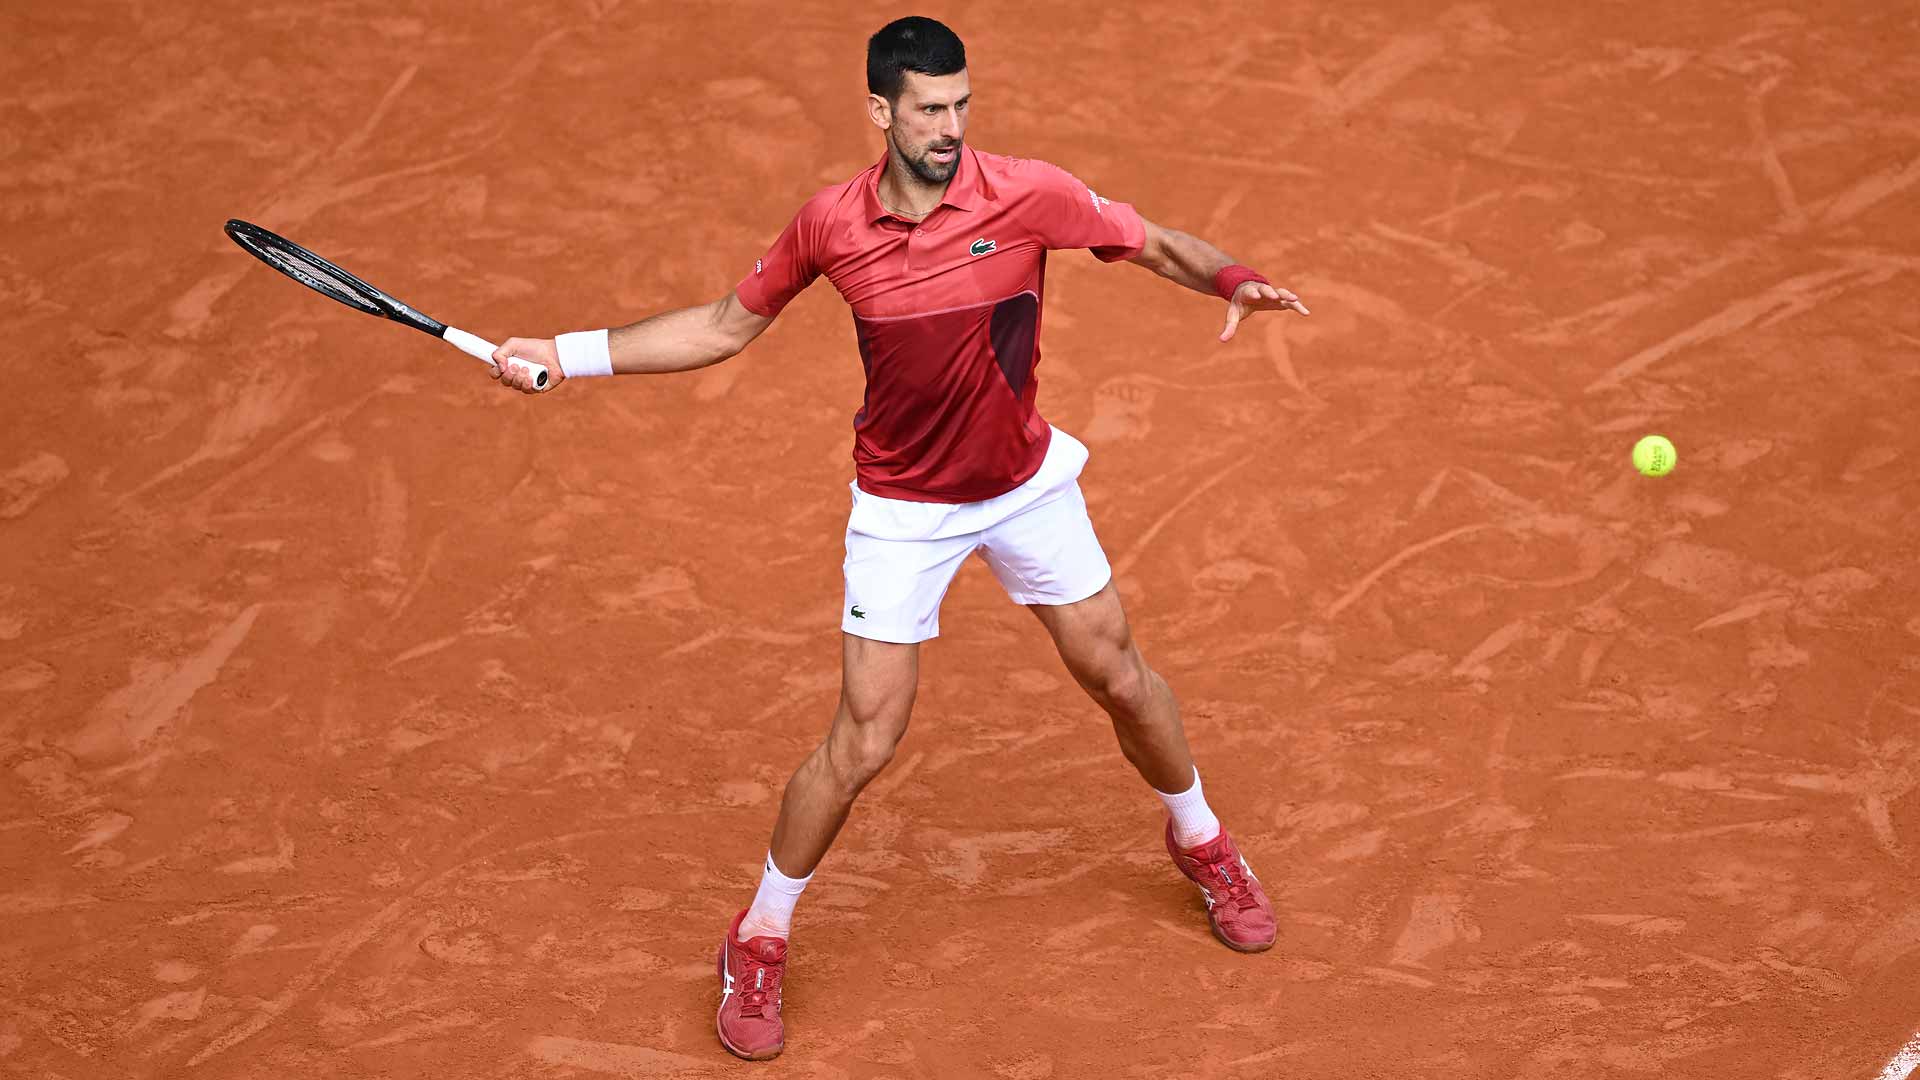 Djokovic on knee trouble: 'It definitely disrupted me'